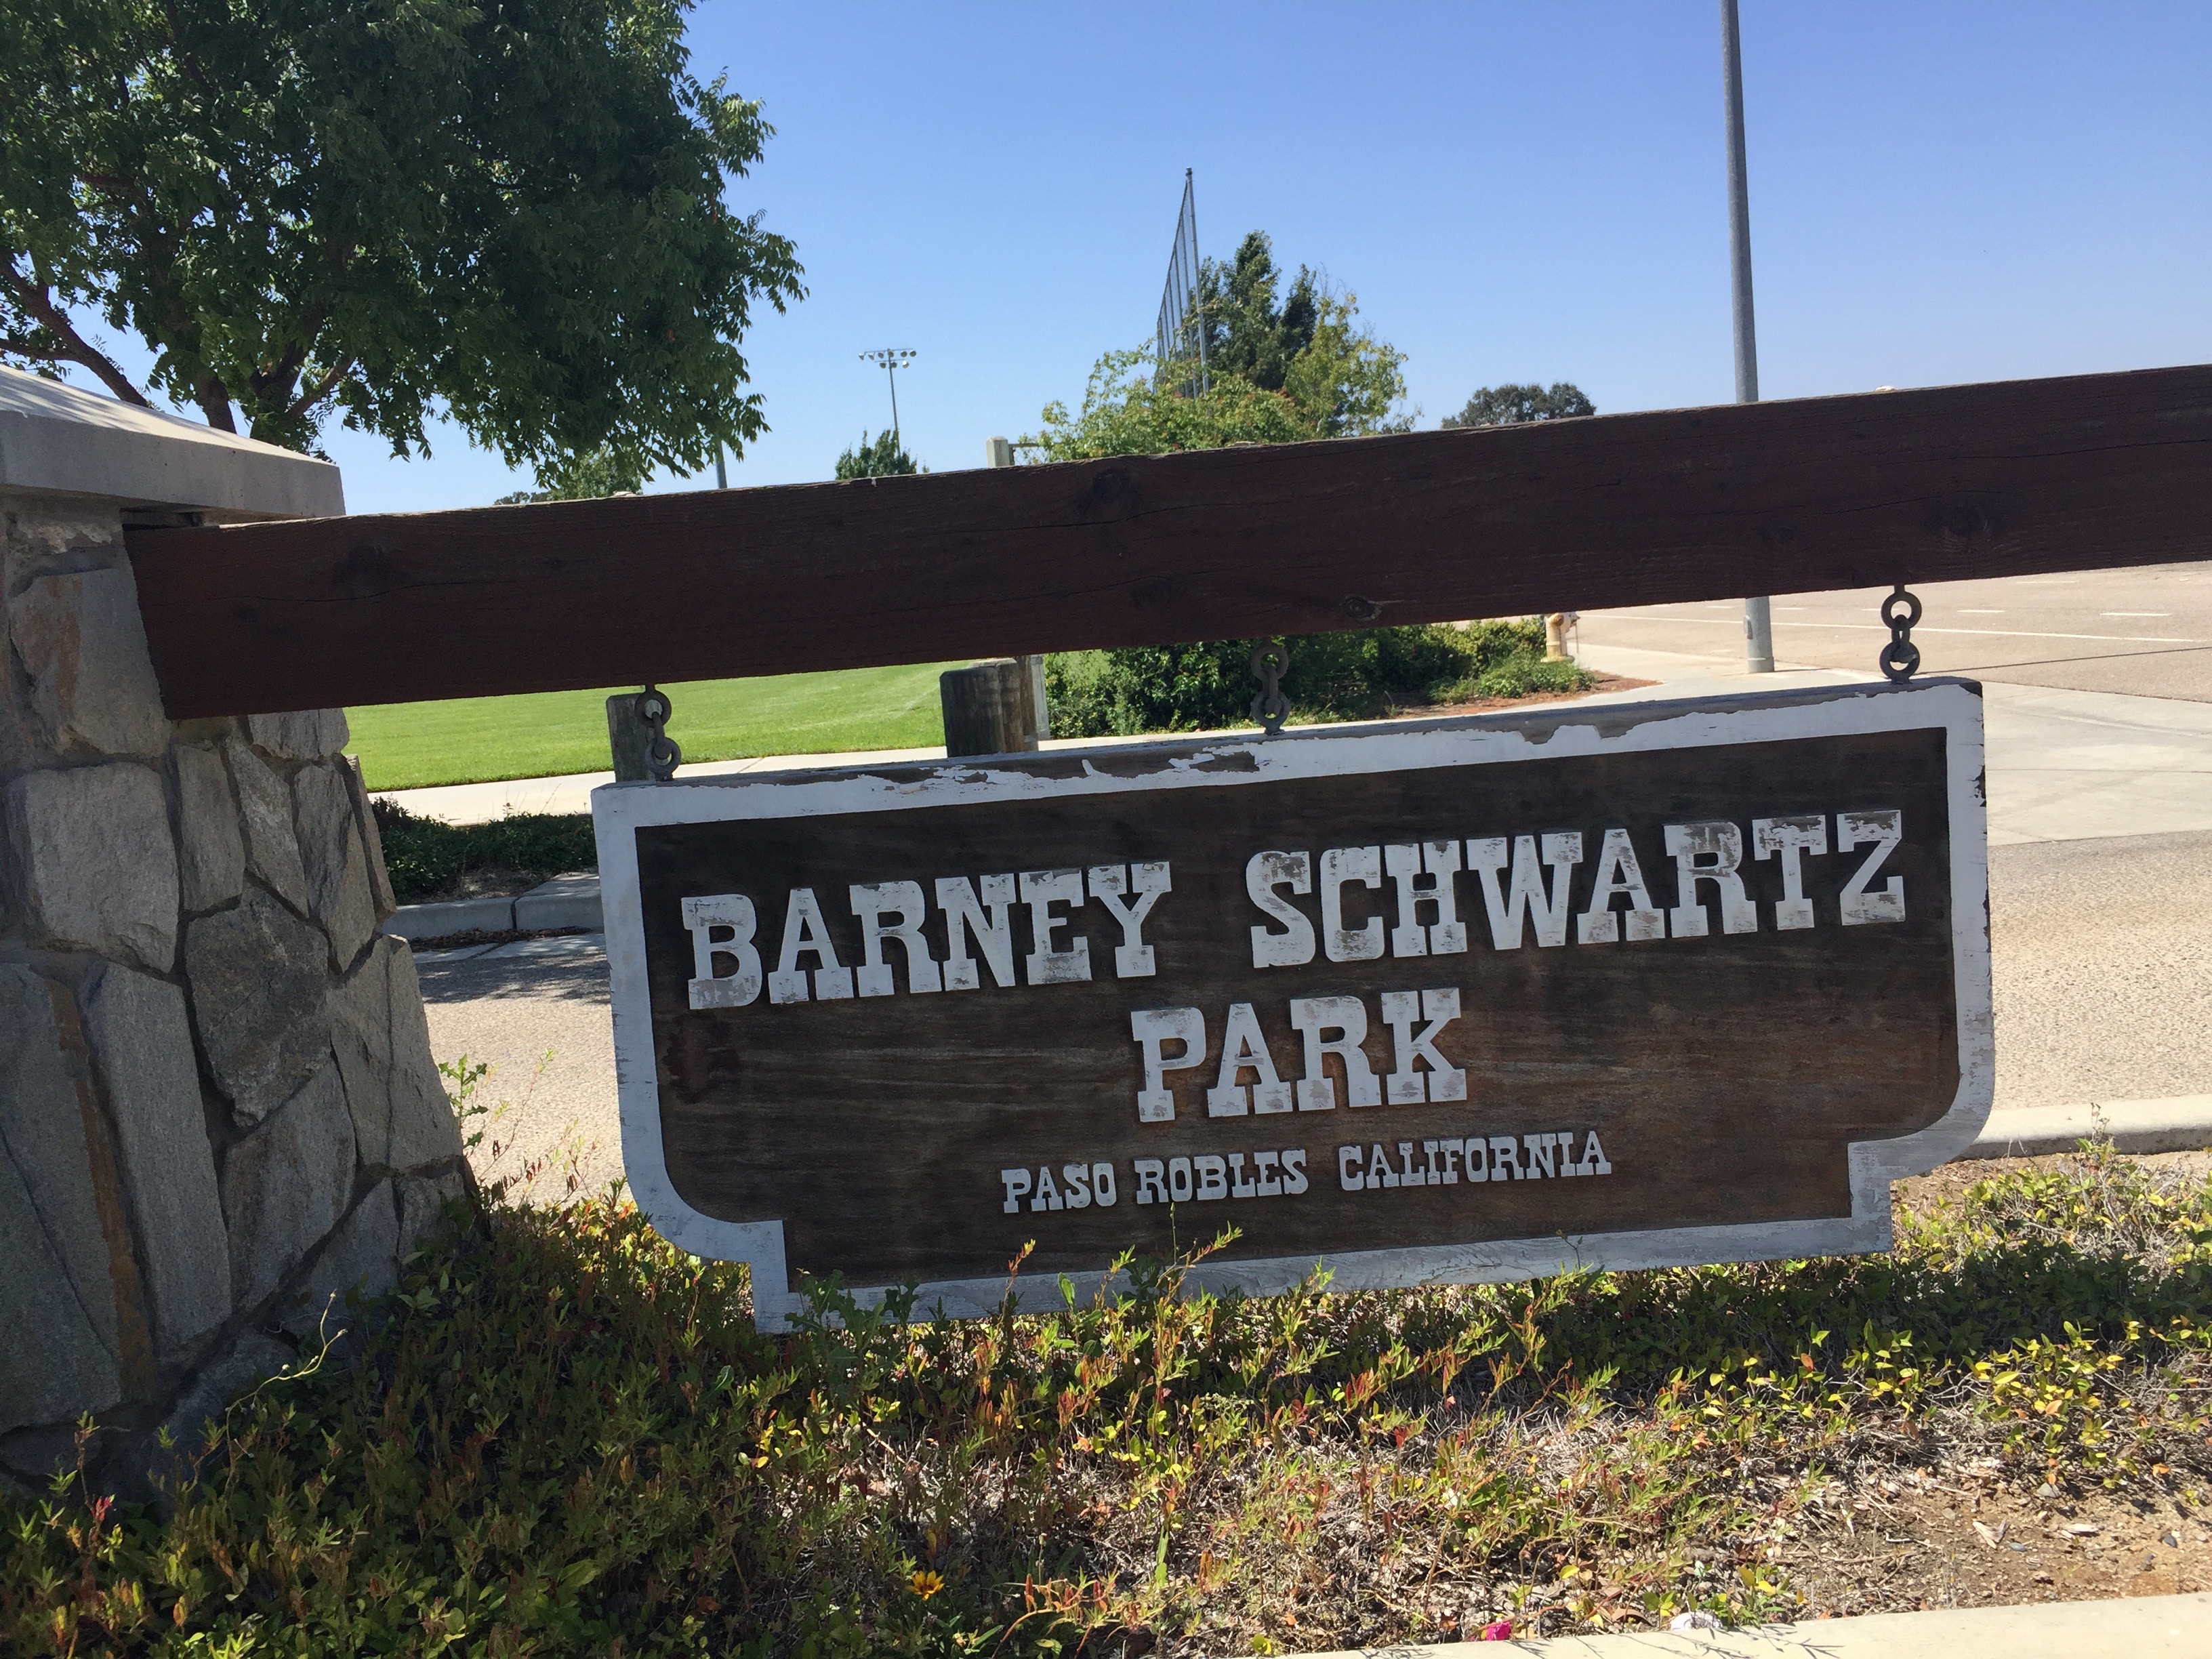 Barney Schwartz Park in Paso Robles California